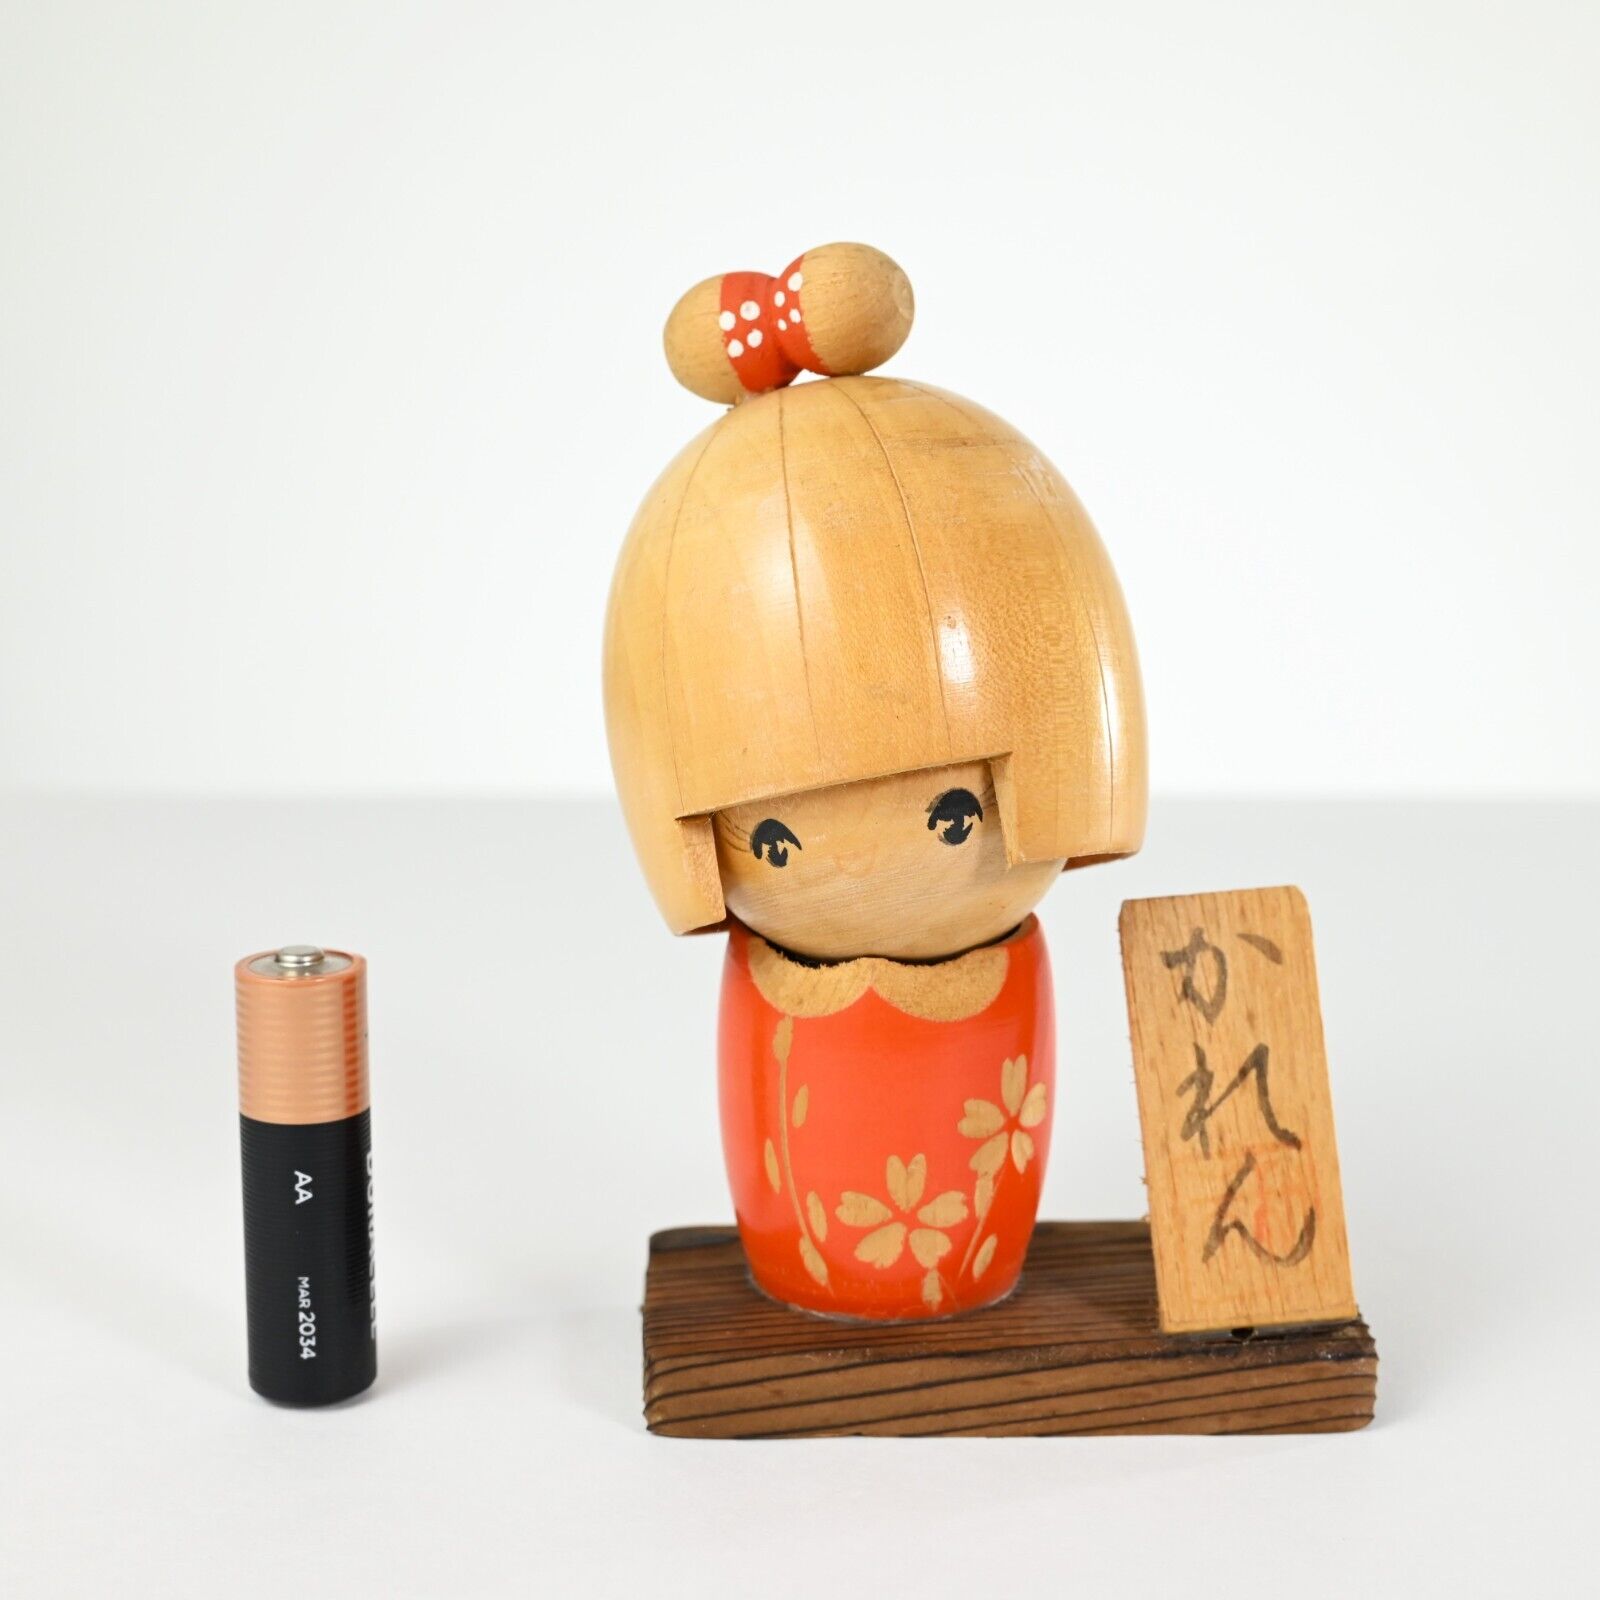 Sosaku KOKESHI Wooden Doll, Signed by Artist, Japan - 5\